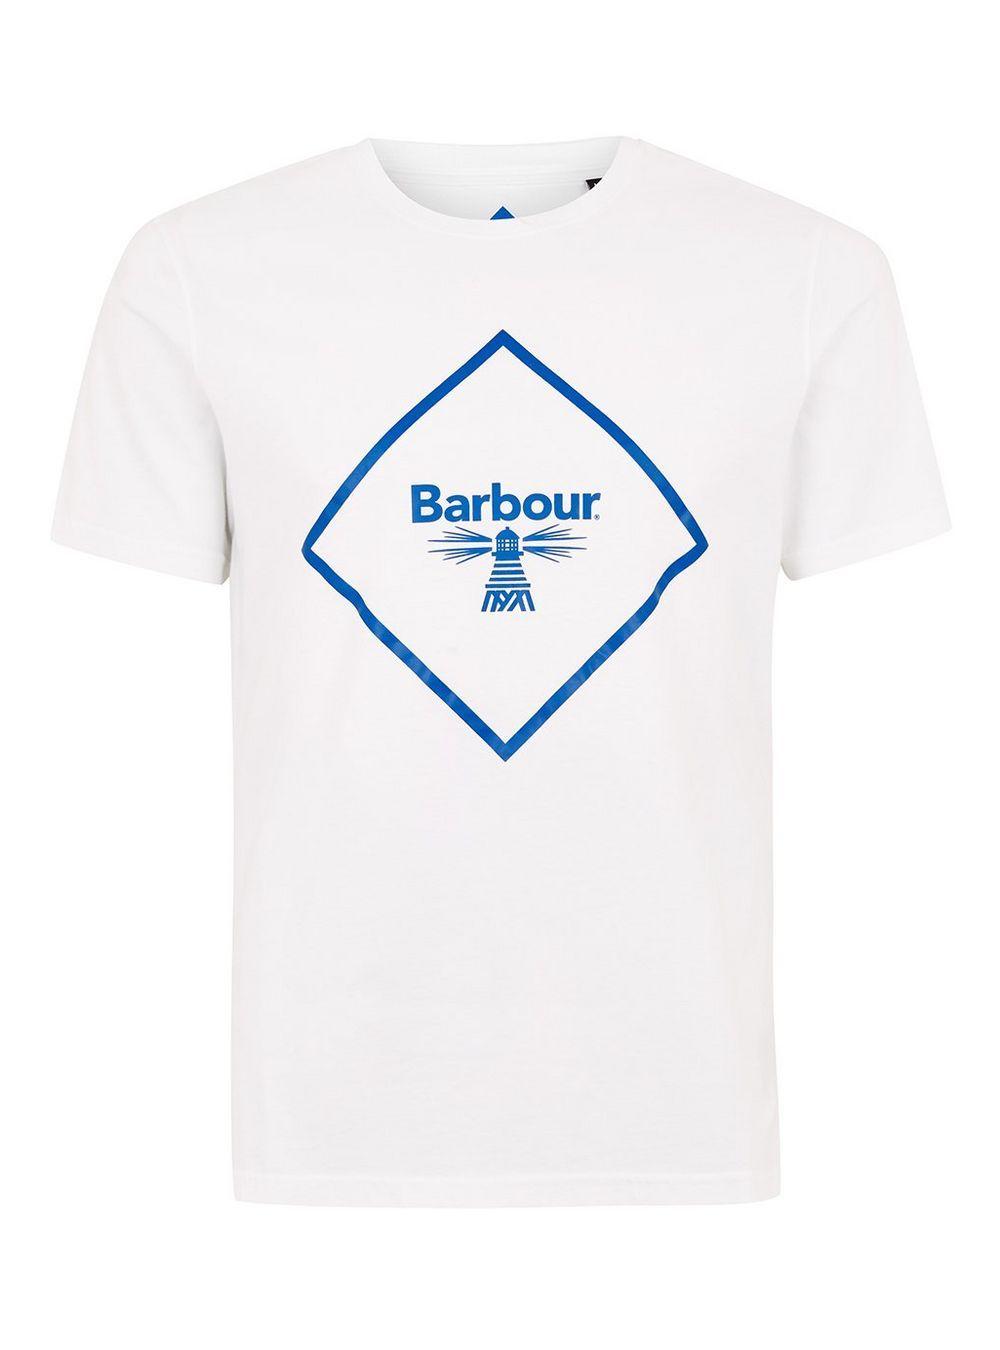 Topman Logo - BARBOUR BEACON White Logo T Shirt's T Shirts & Vests